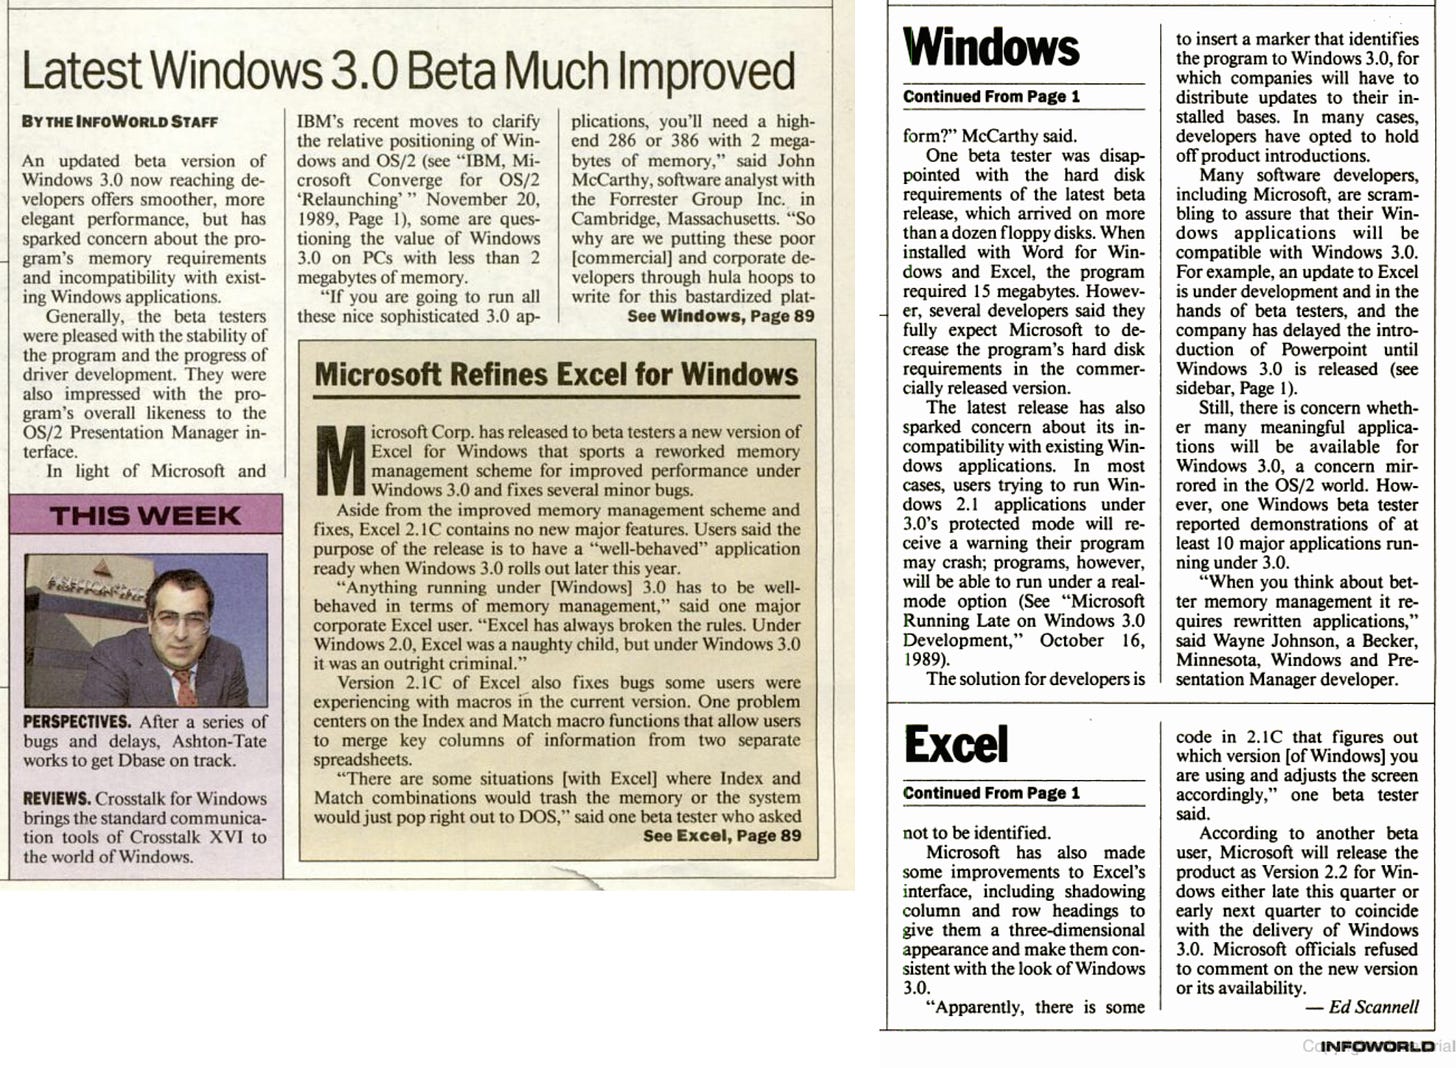 Infoworld headline "Latest Windows 3.0 Beta Much Improved"